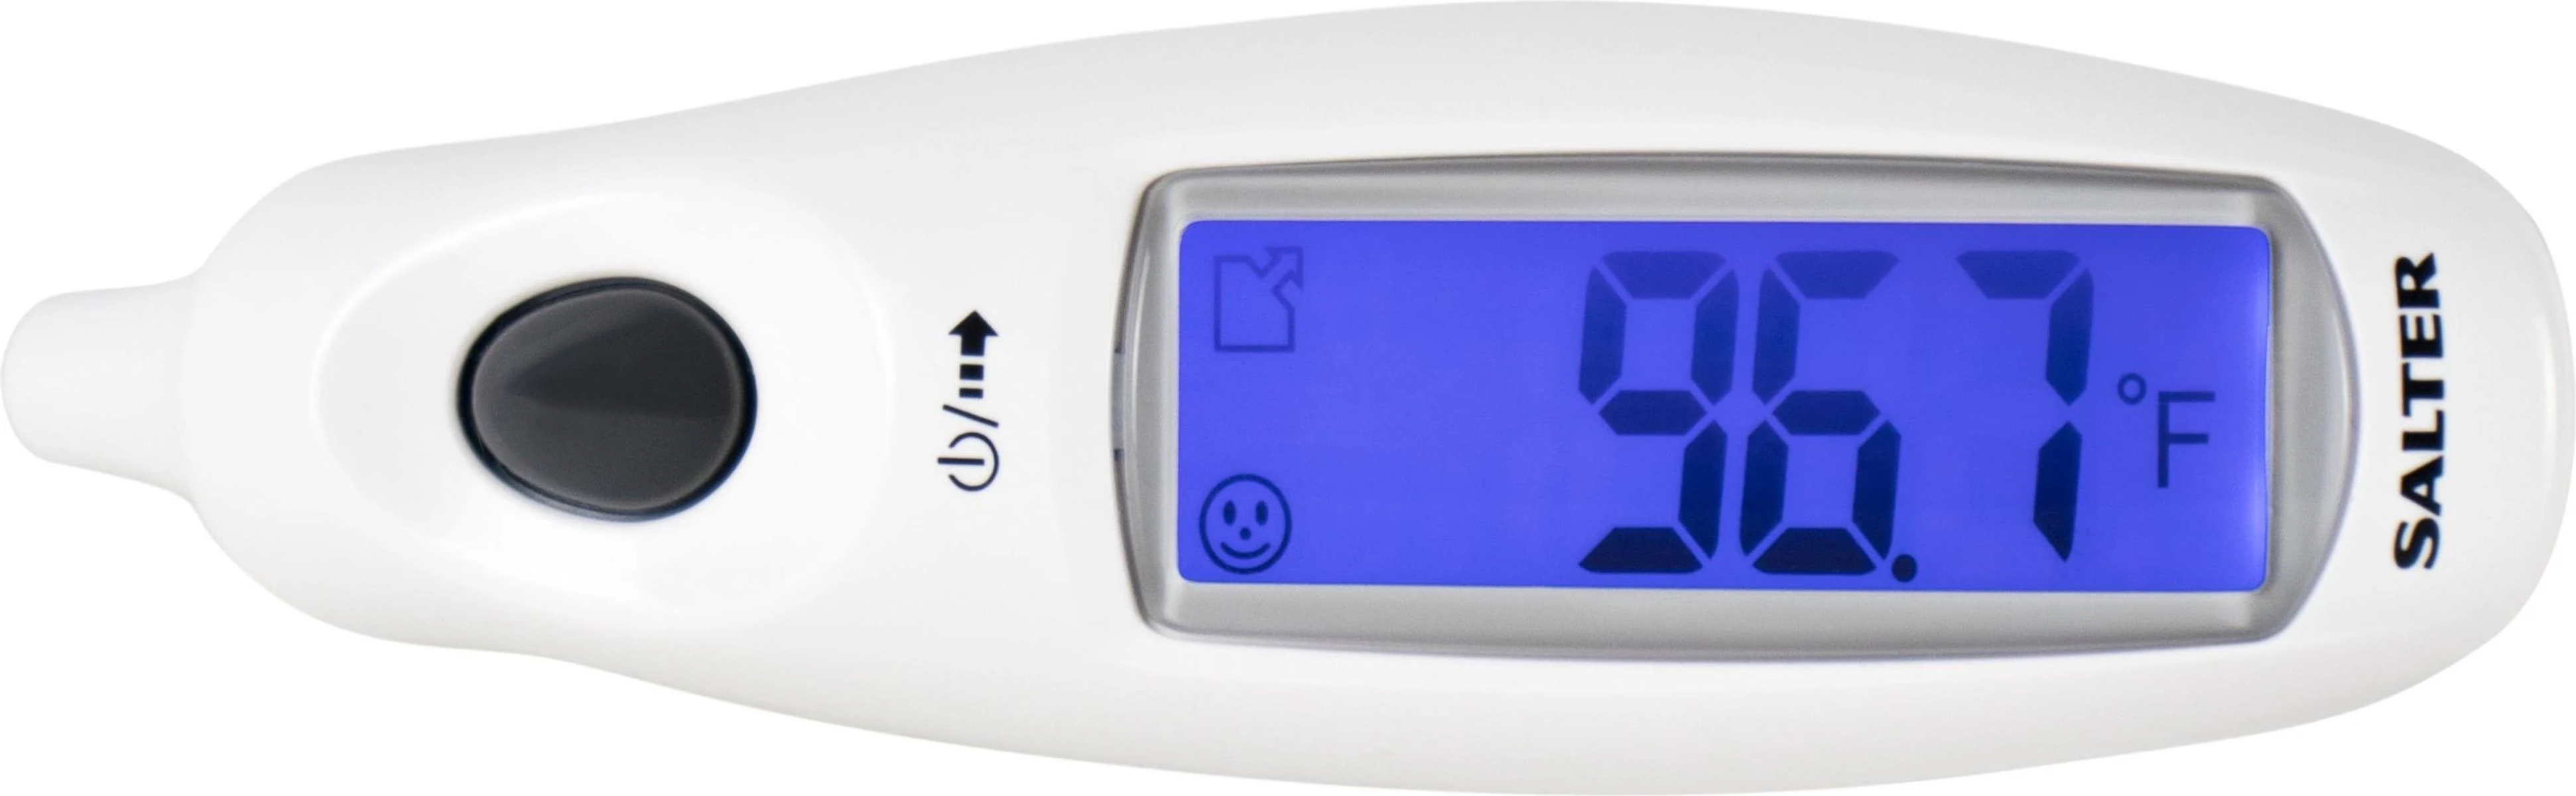 TE-150-EU kontaktlose Fieberthermometer (Messart: Infrarotmessung) SALTER